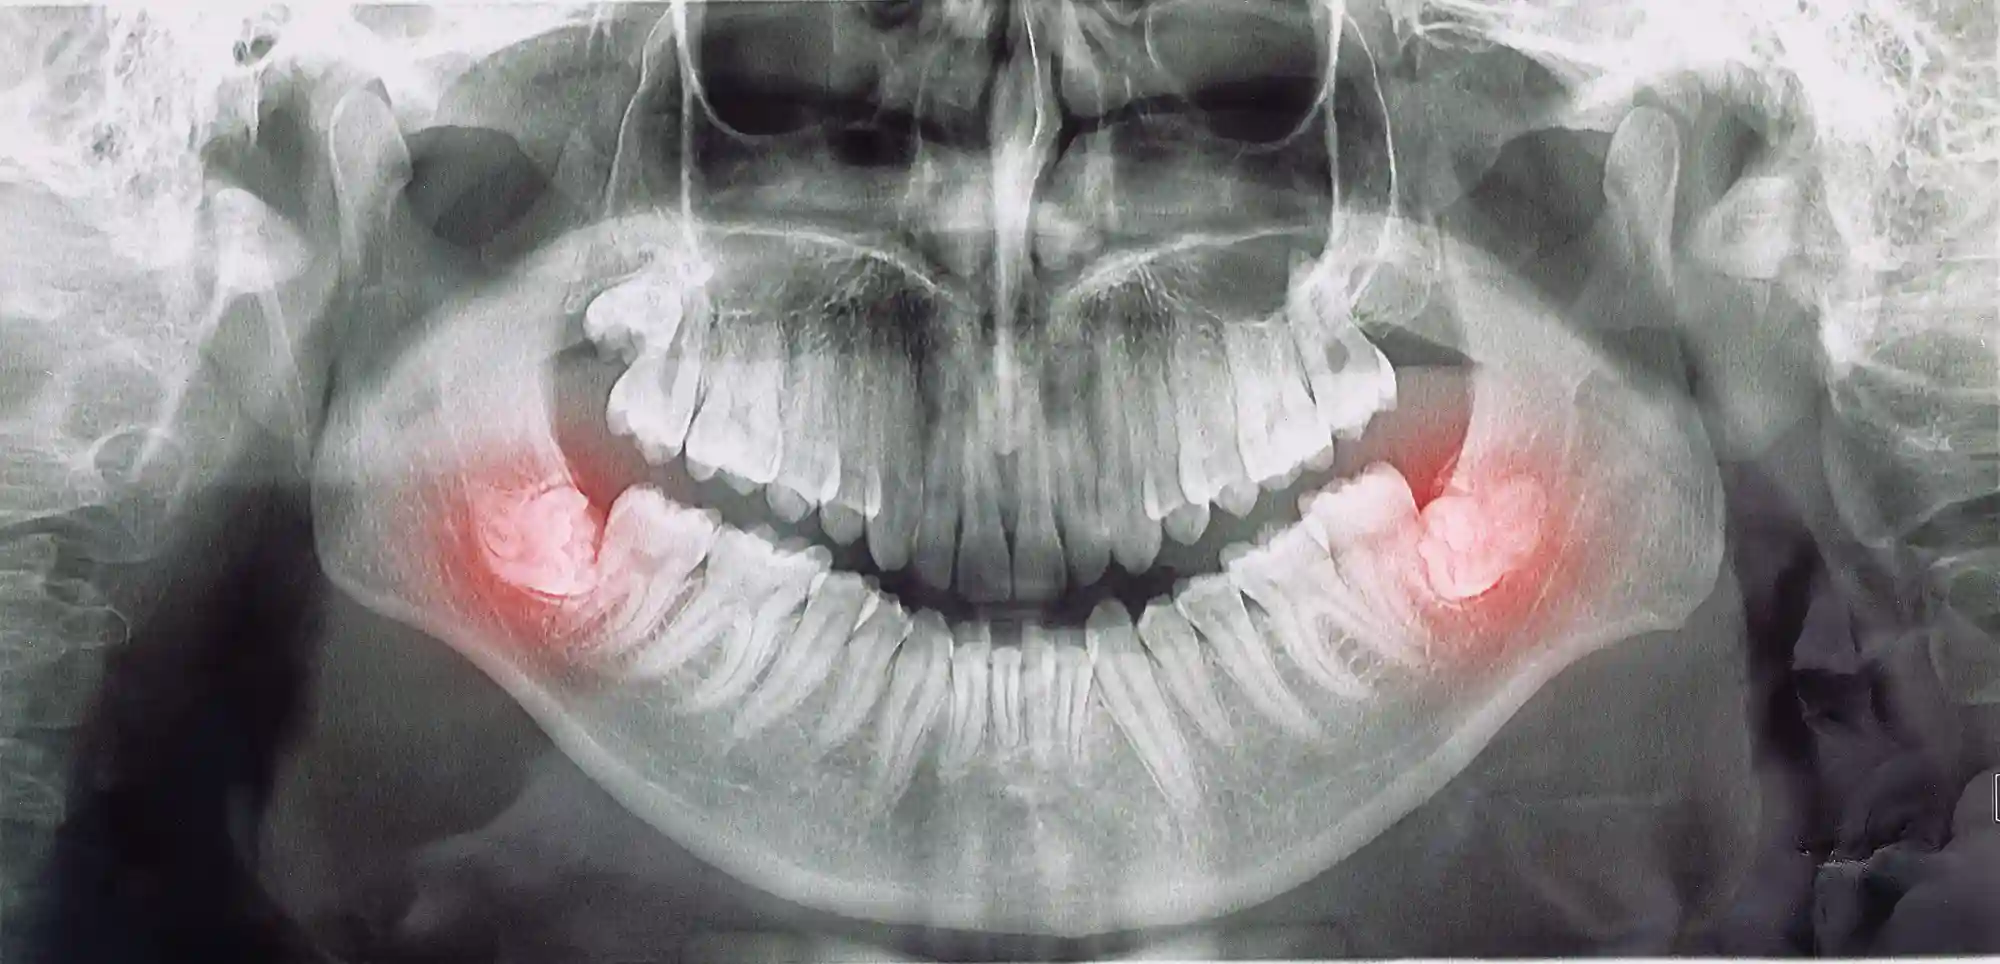 عکس دندانپزشکی